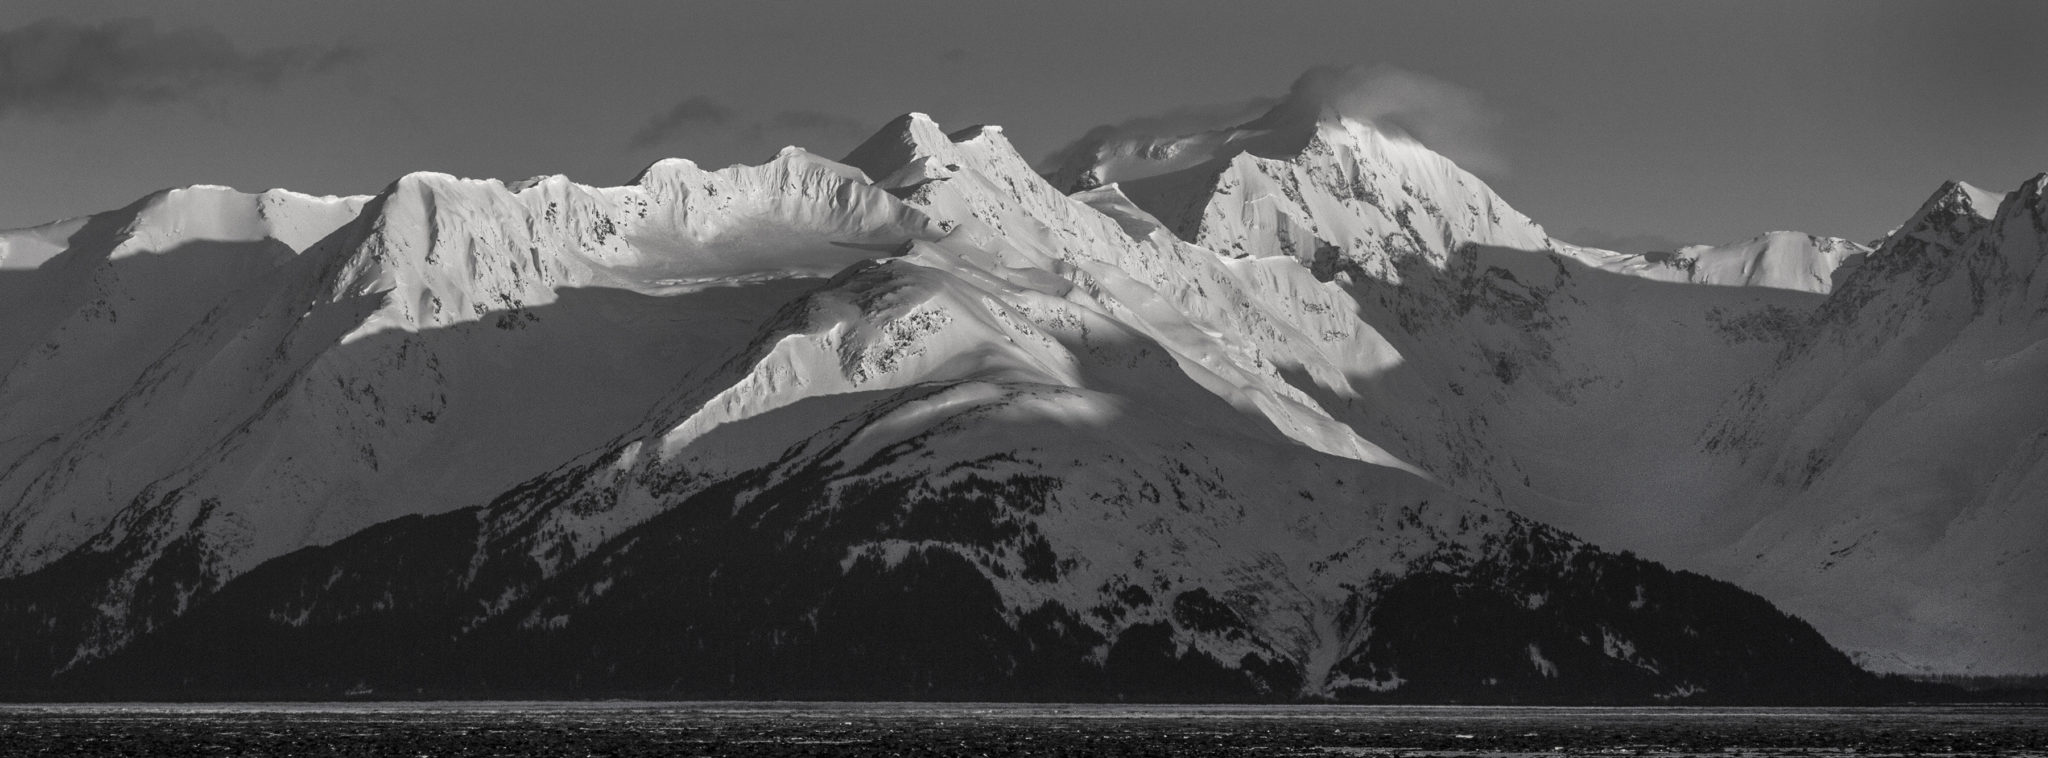 Turnagain Arm mountains, south of Anchorage - Best Alaska photography | Alaskafoto